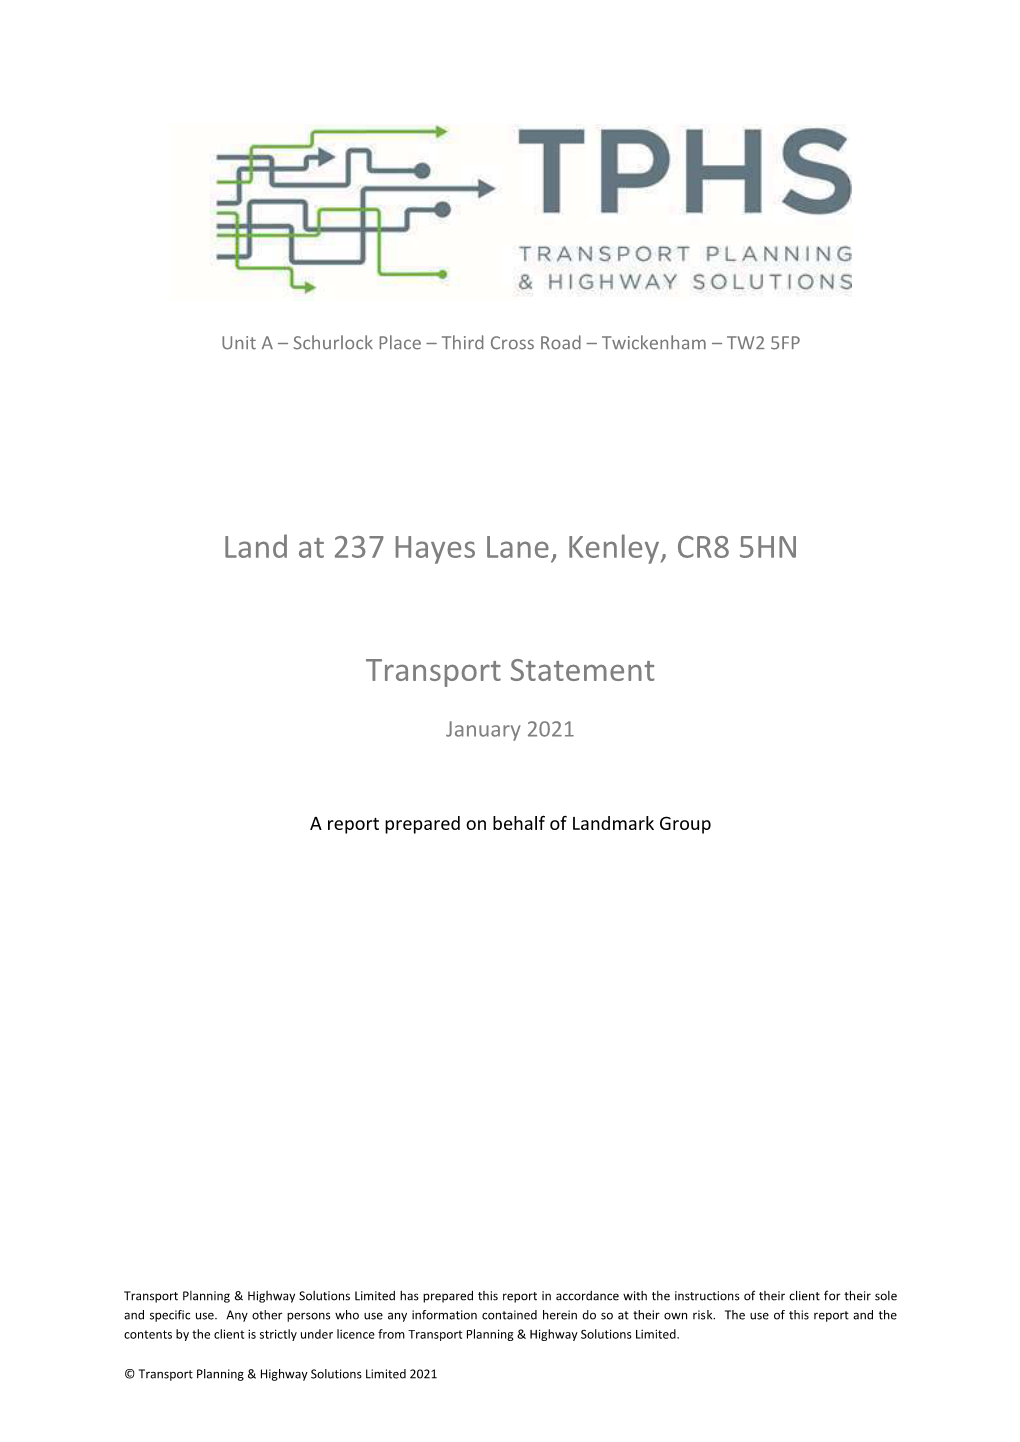 Land at 237 Hayes Lane, Kenley, CR8 5HN Transport Statement